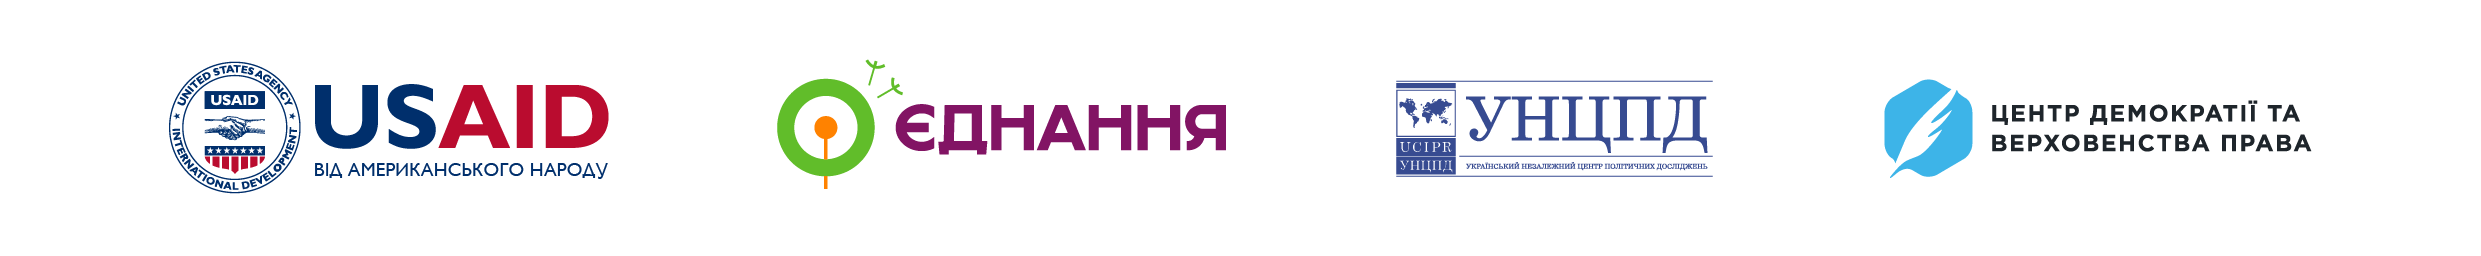 partners logos ukr